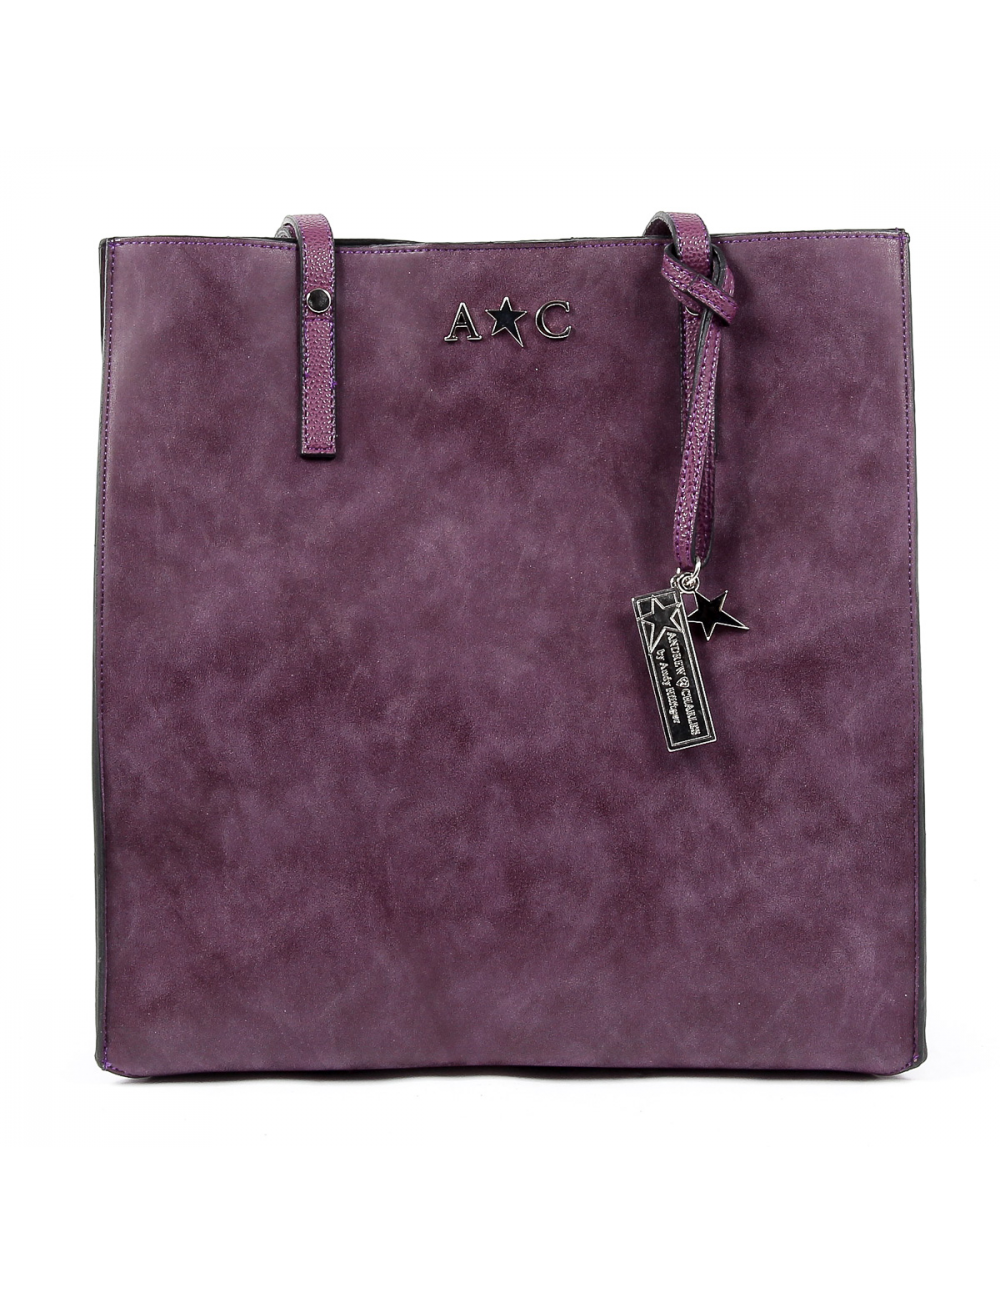 Andrew Charles Womens Handbag Purple SERINA - YuppyCollections